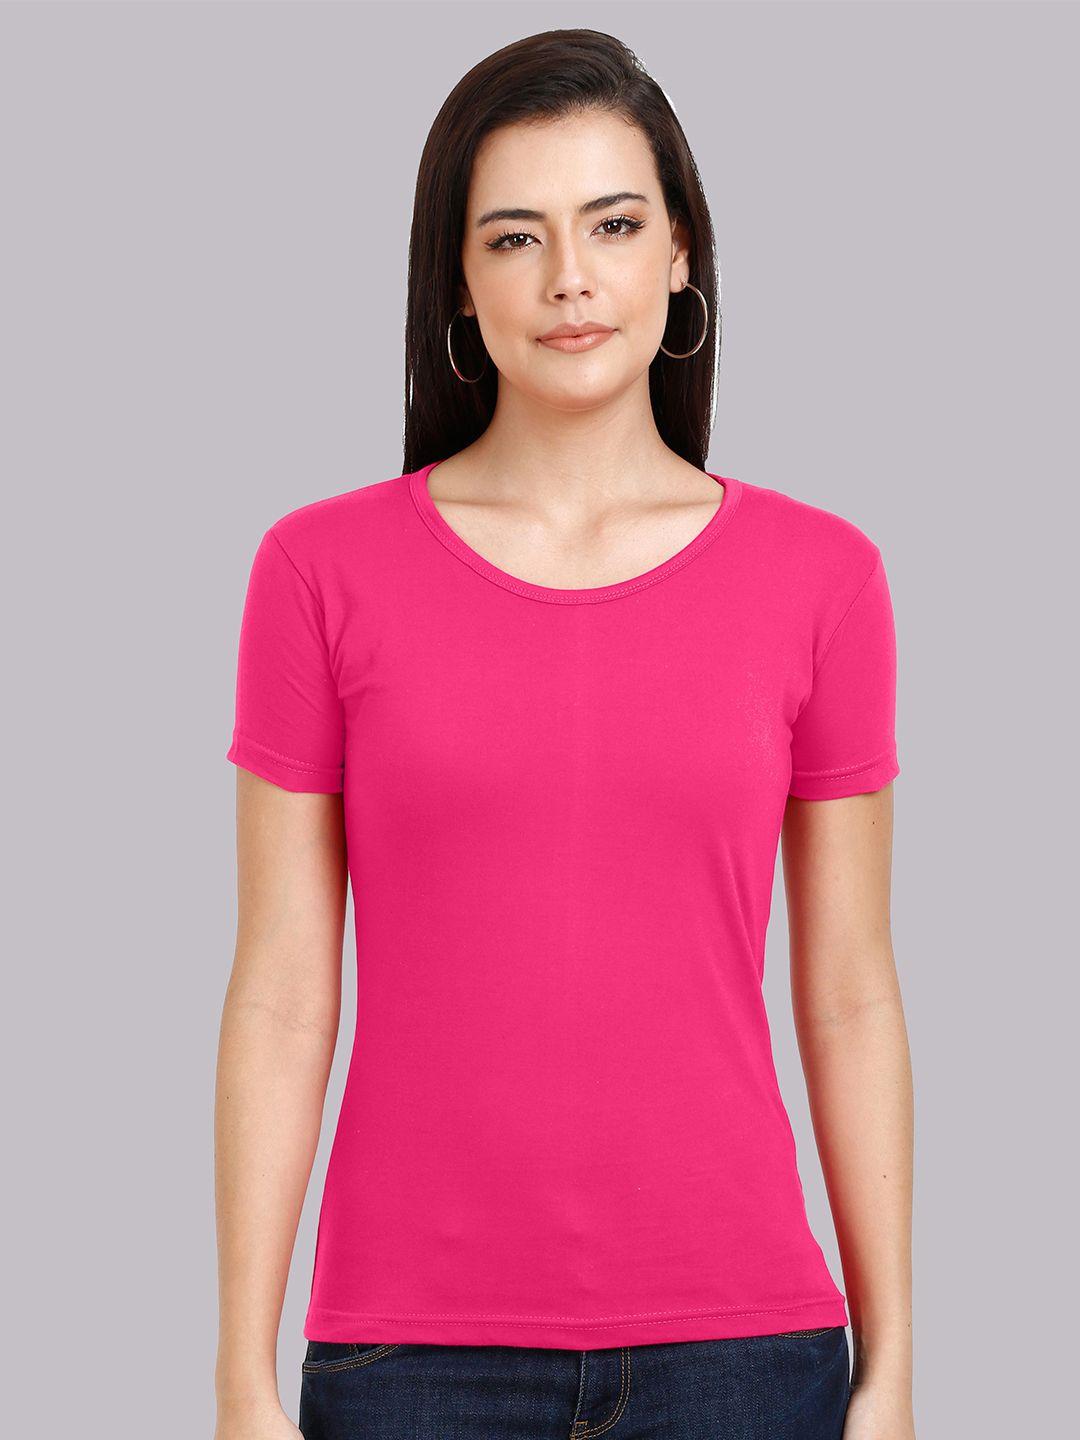 fleximaa women fuchsia pink cotton t-shirt